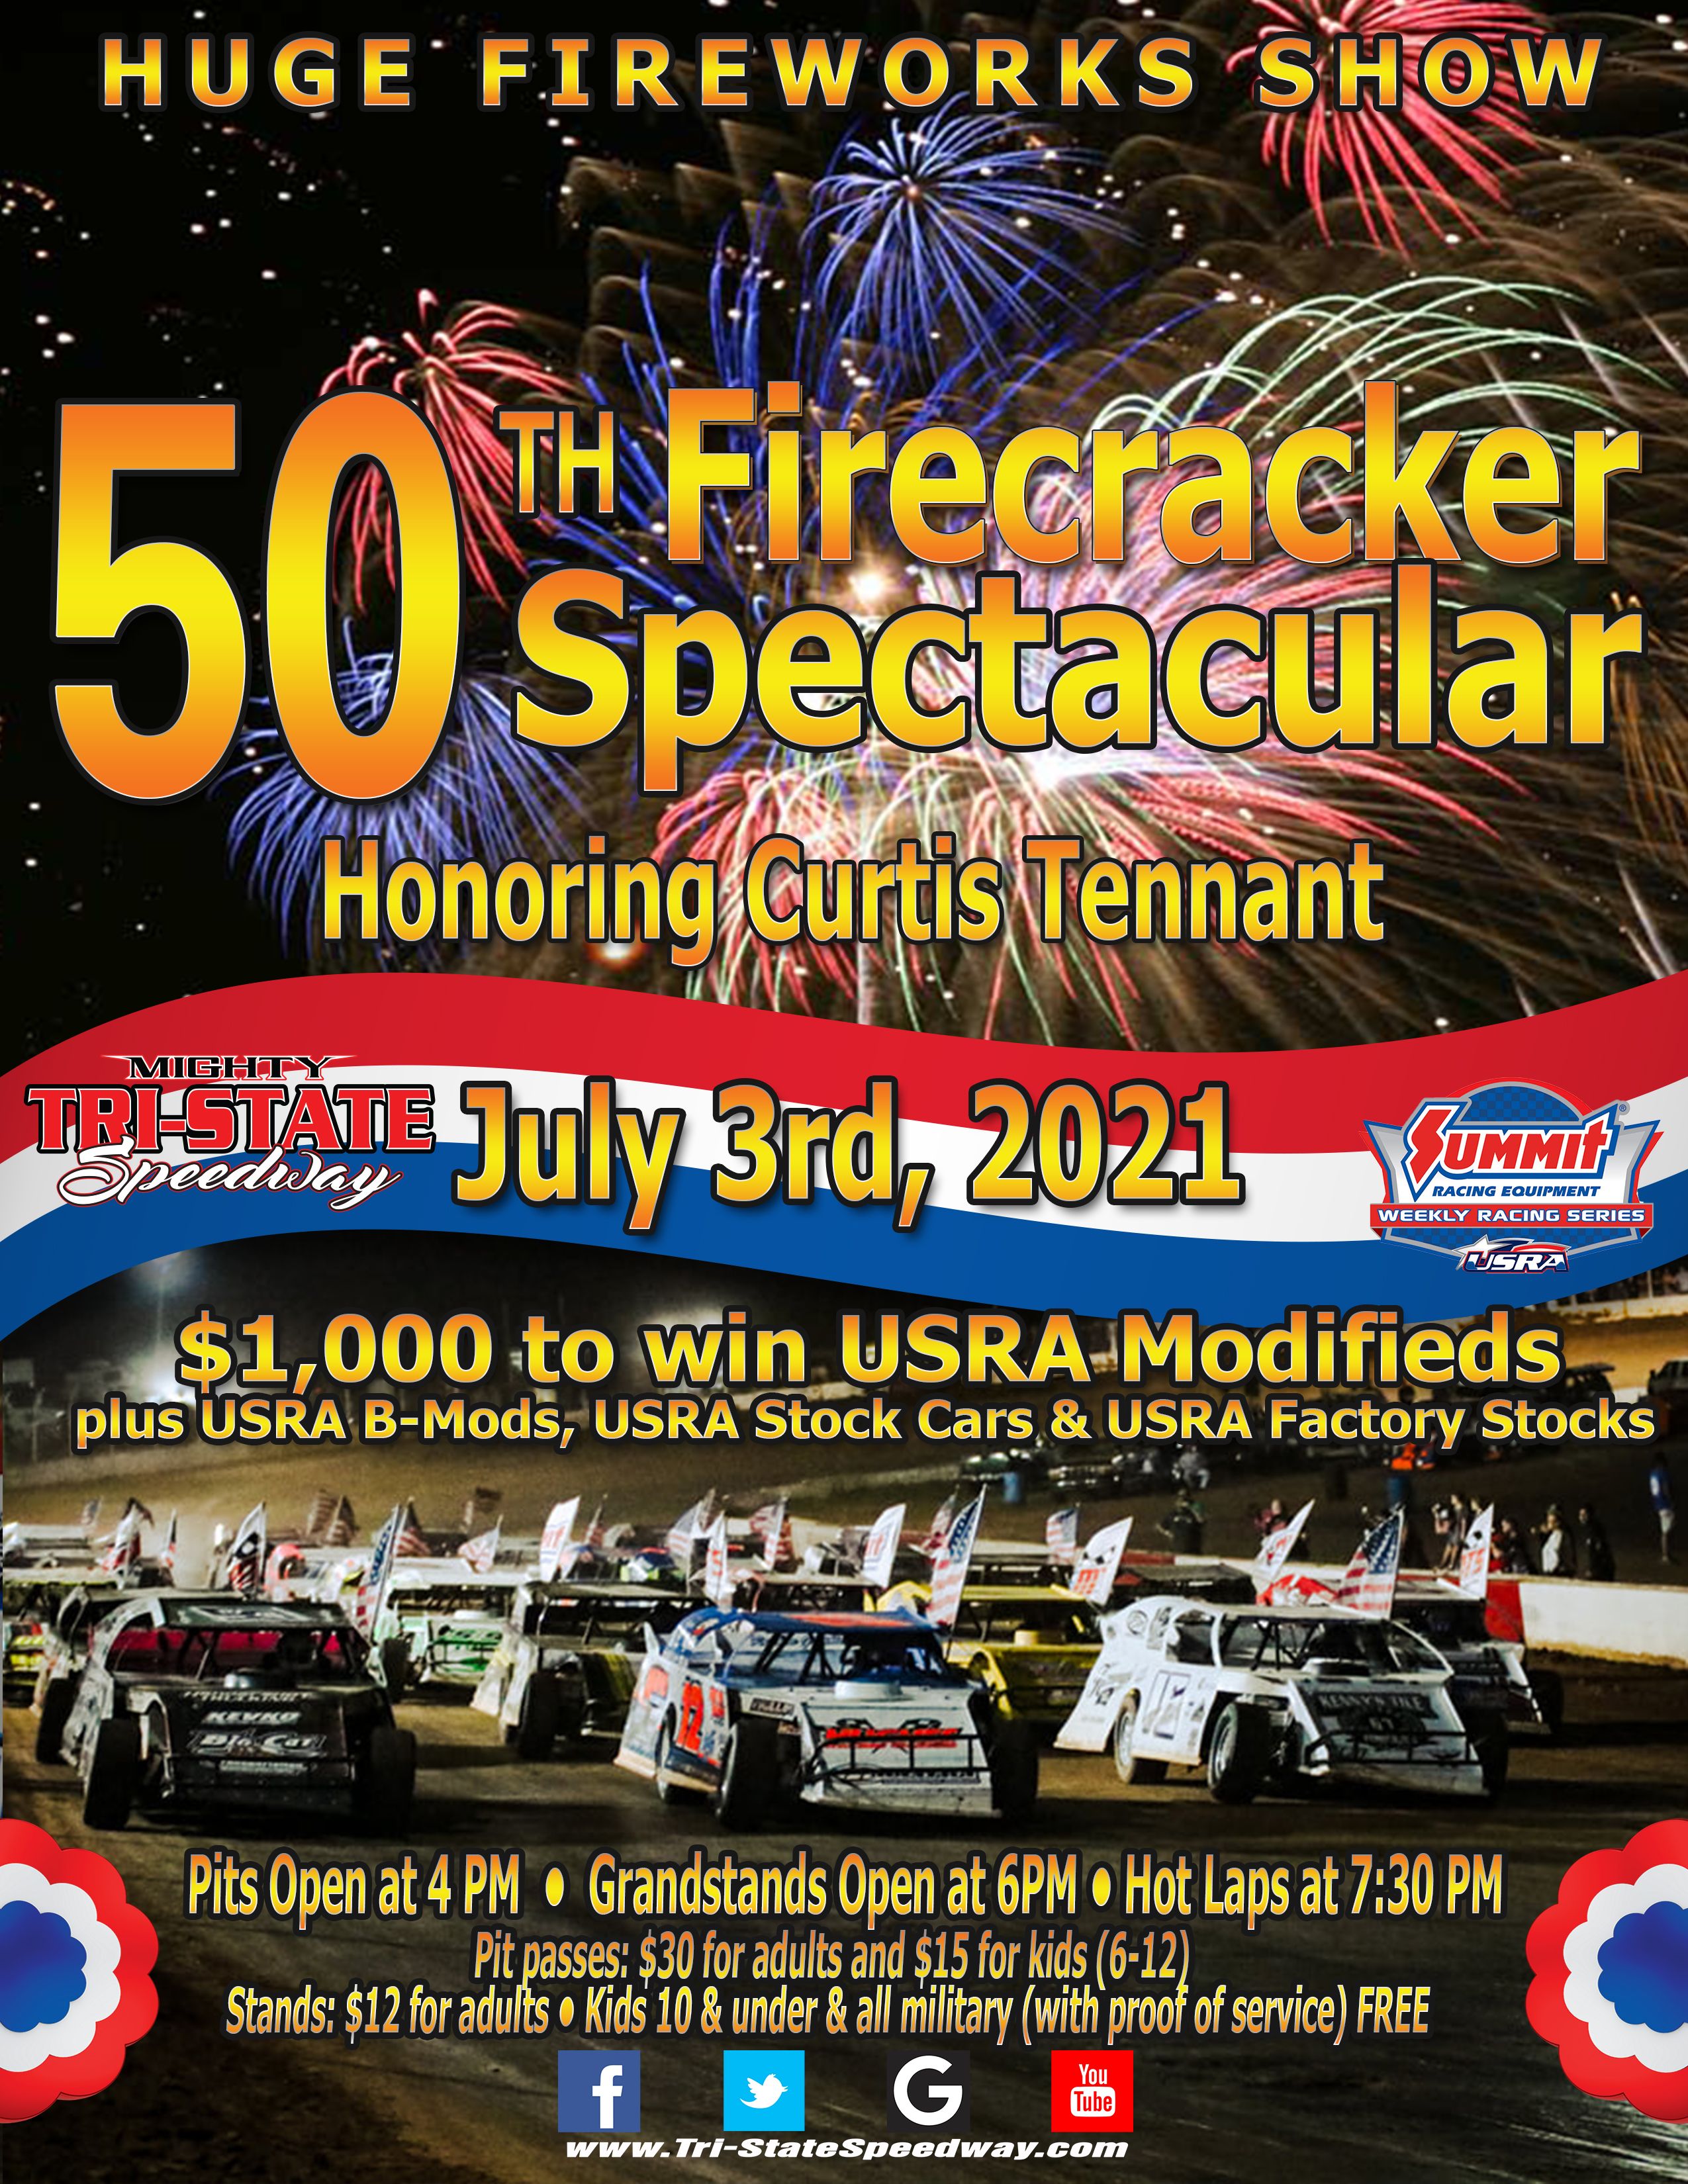 50th Annual Firecracker Spectacular honoring Curtis Tennant